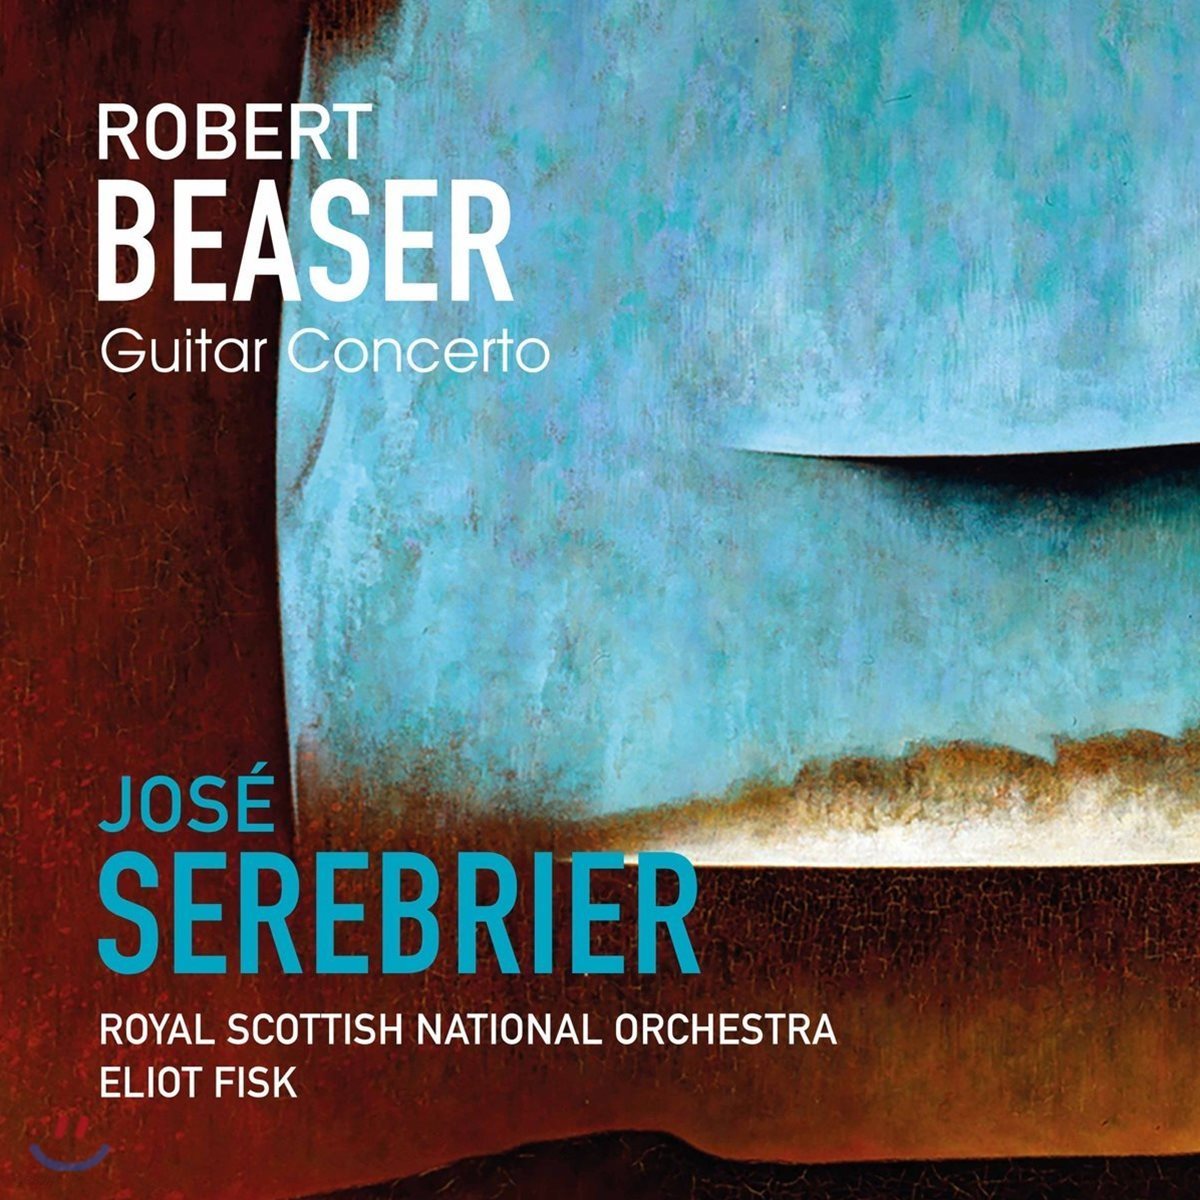 Jose Serebrier 로버트 비저: 기타 협주곡 - 엘리어트 피스크, 로열 스코티쉬 내셔널 오케스트라, 호세 세레브리에르 (Robert Beaser: Guitar Concerto)